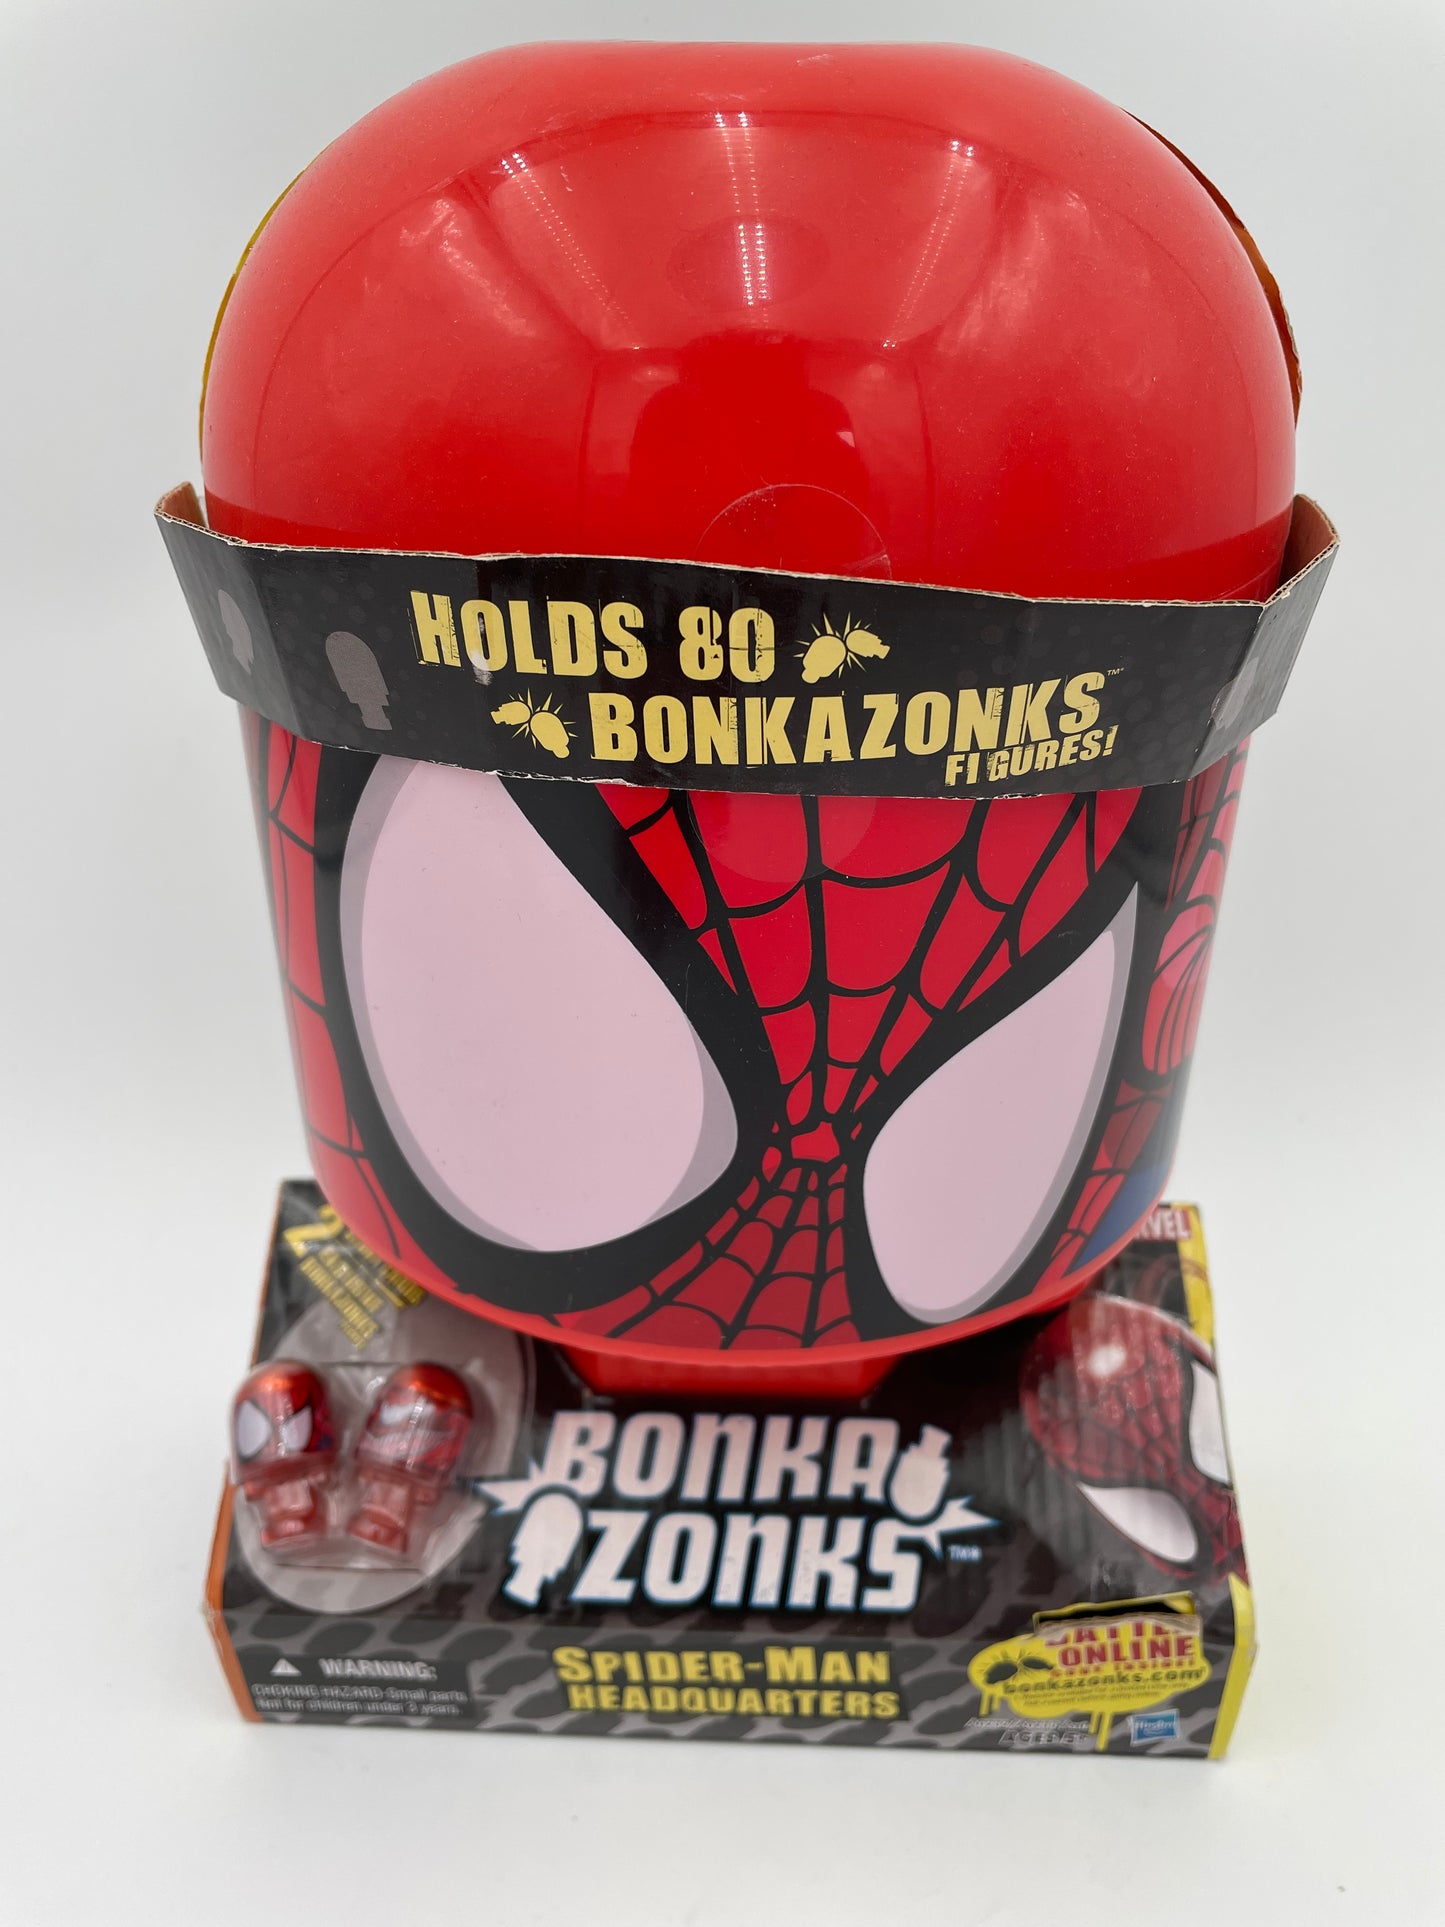 Spiderman Headquarters - Bonka Zonks 2011 #100348